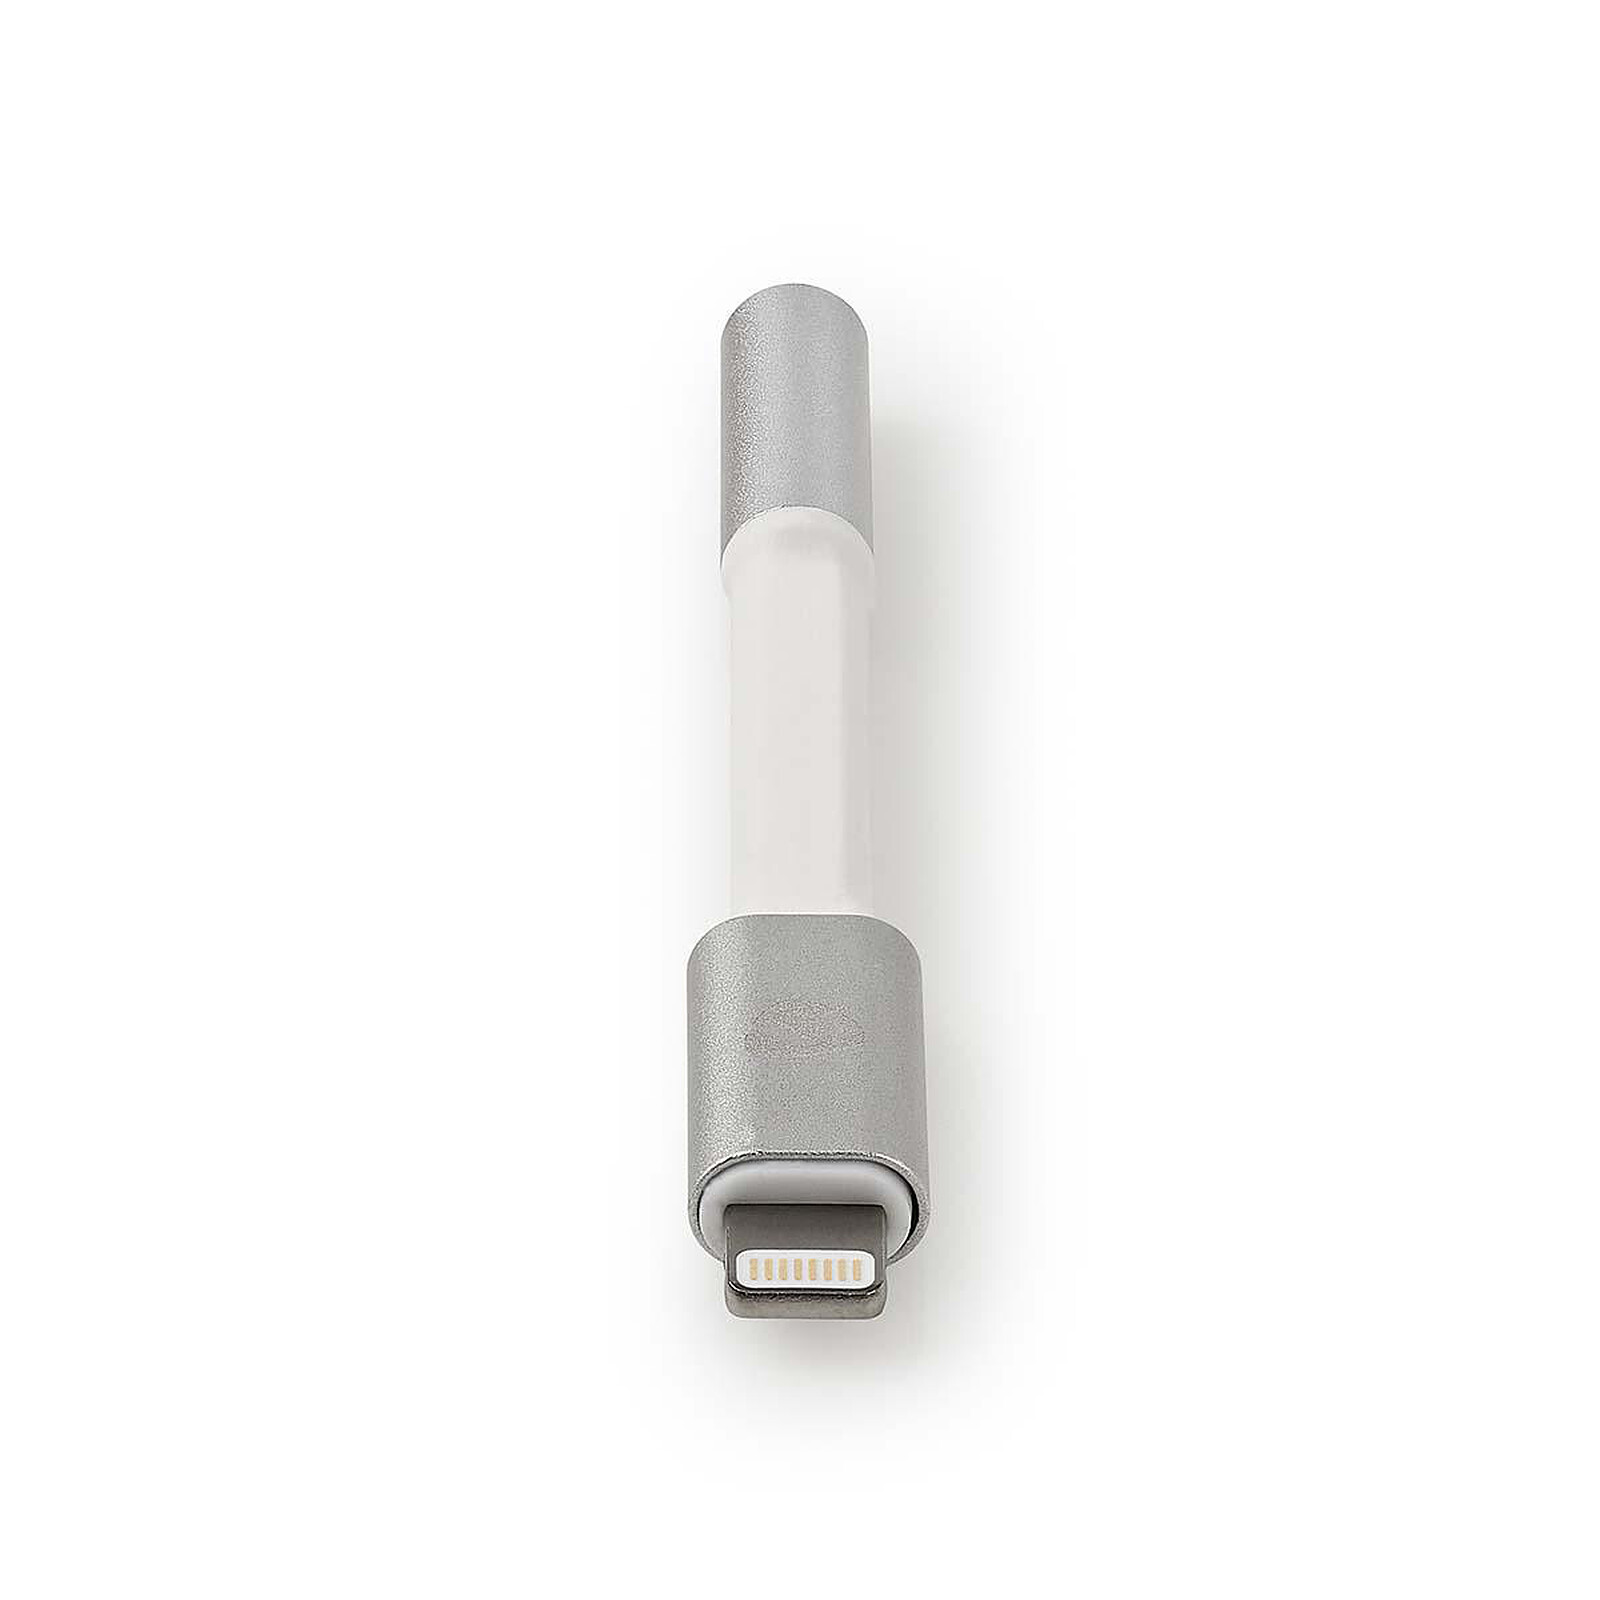 Apple câble audioLightning vers mini-jack 3,5 mm (1,2m) • Blanc